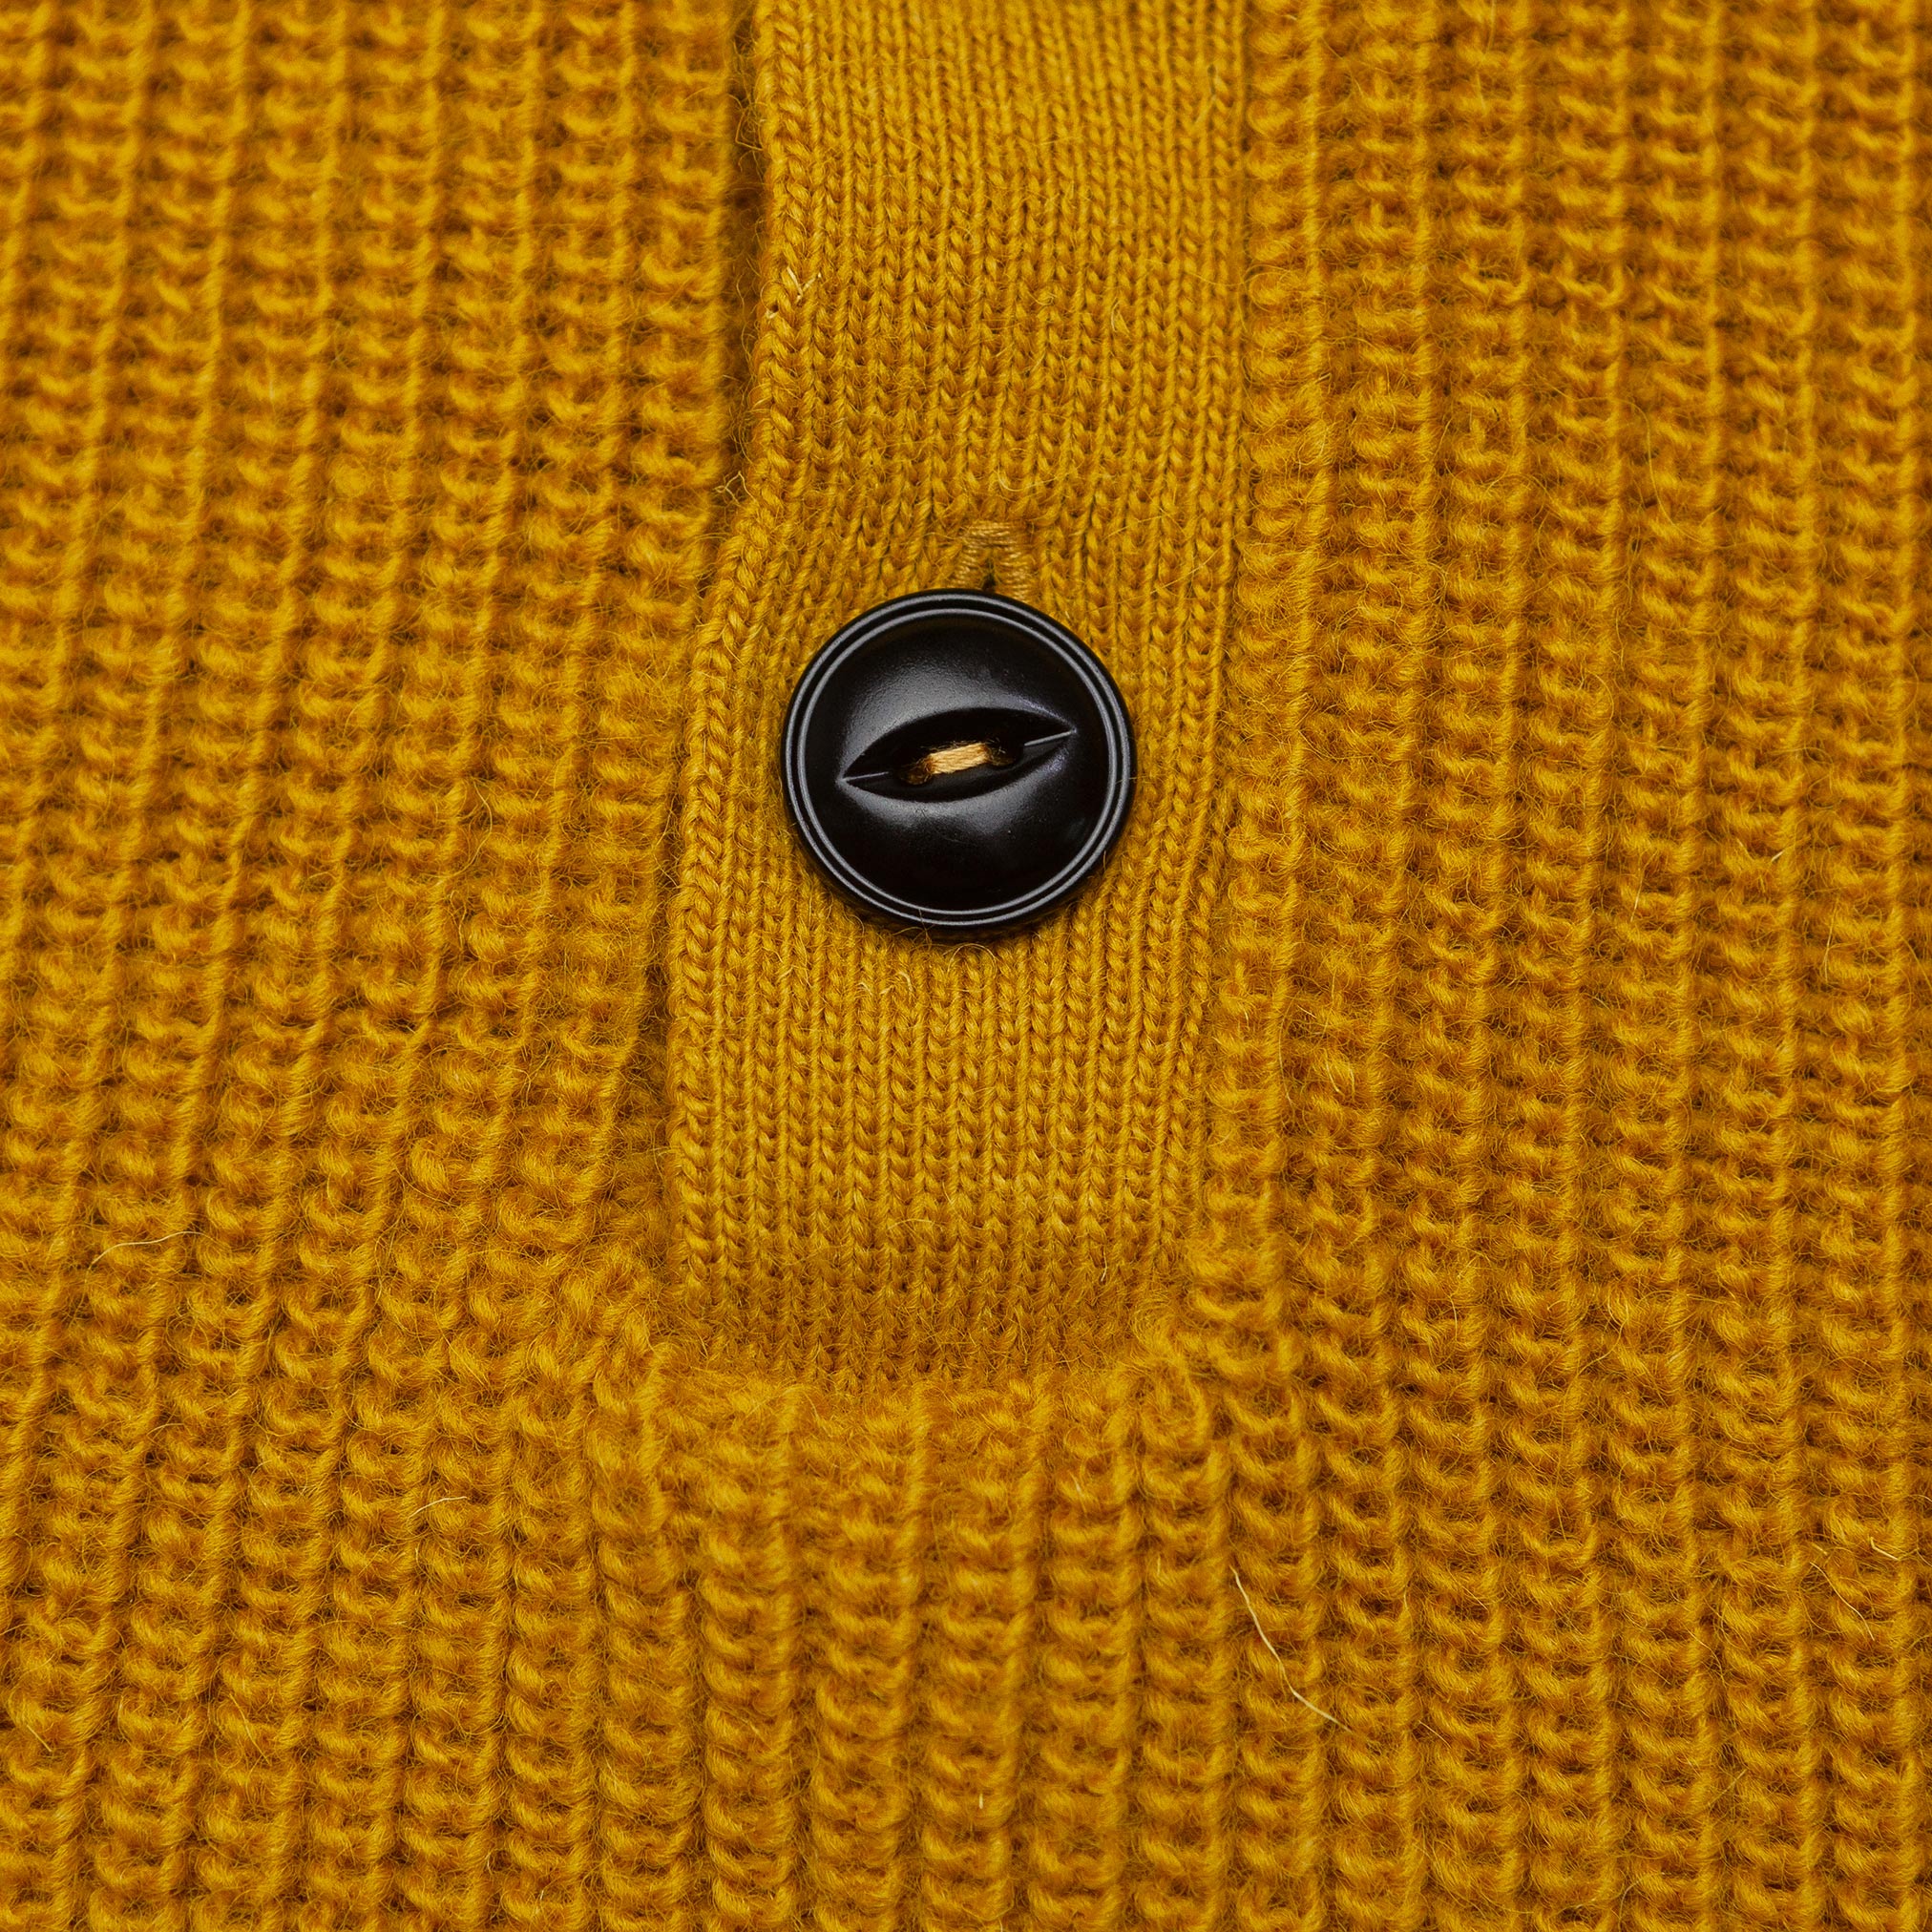 Bull Buttoned Sweater in Mustard